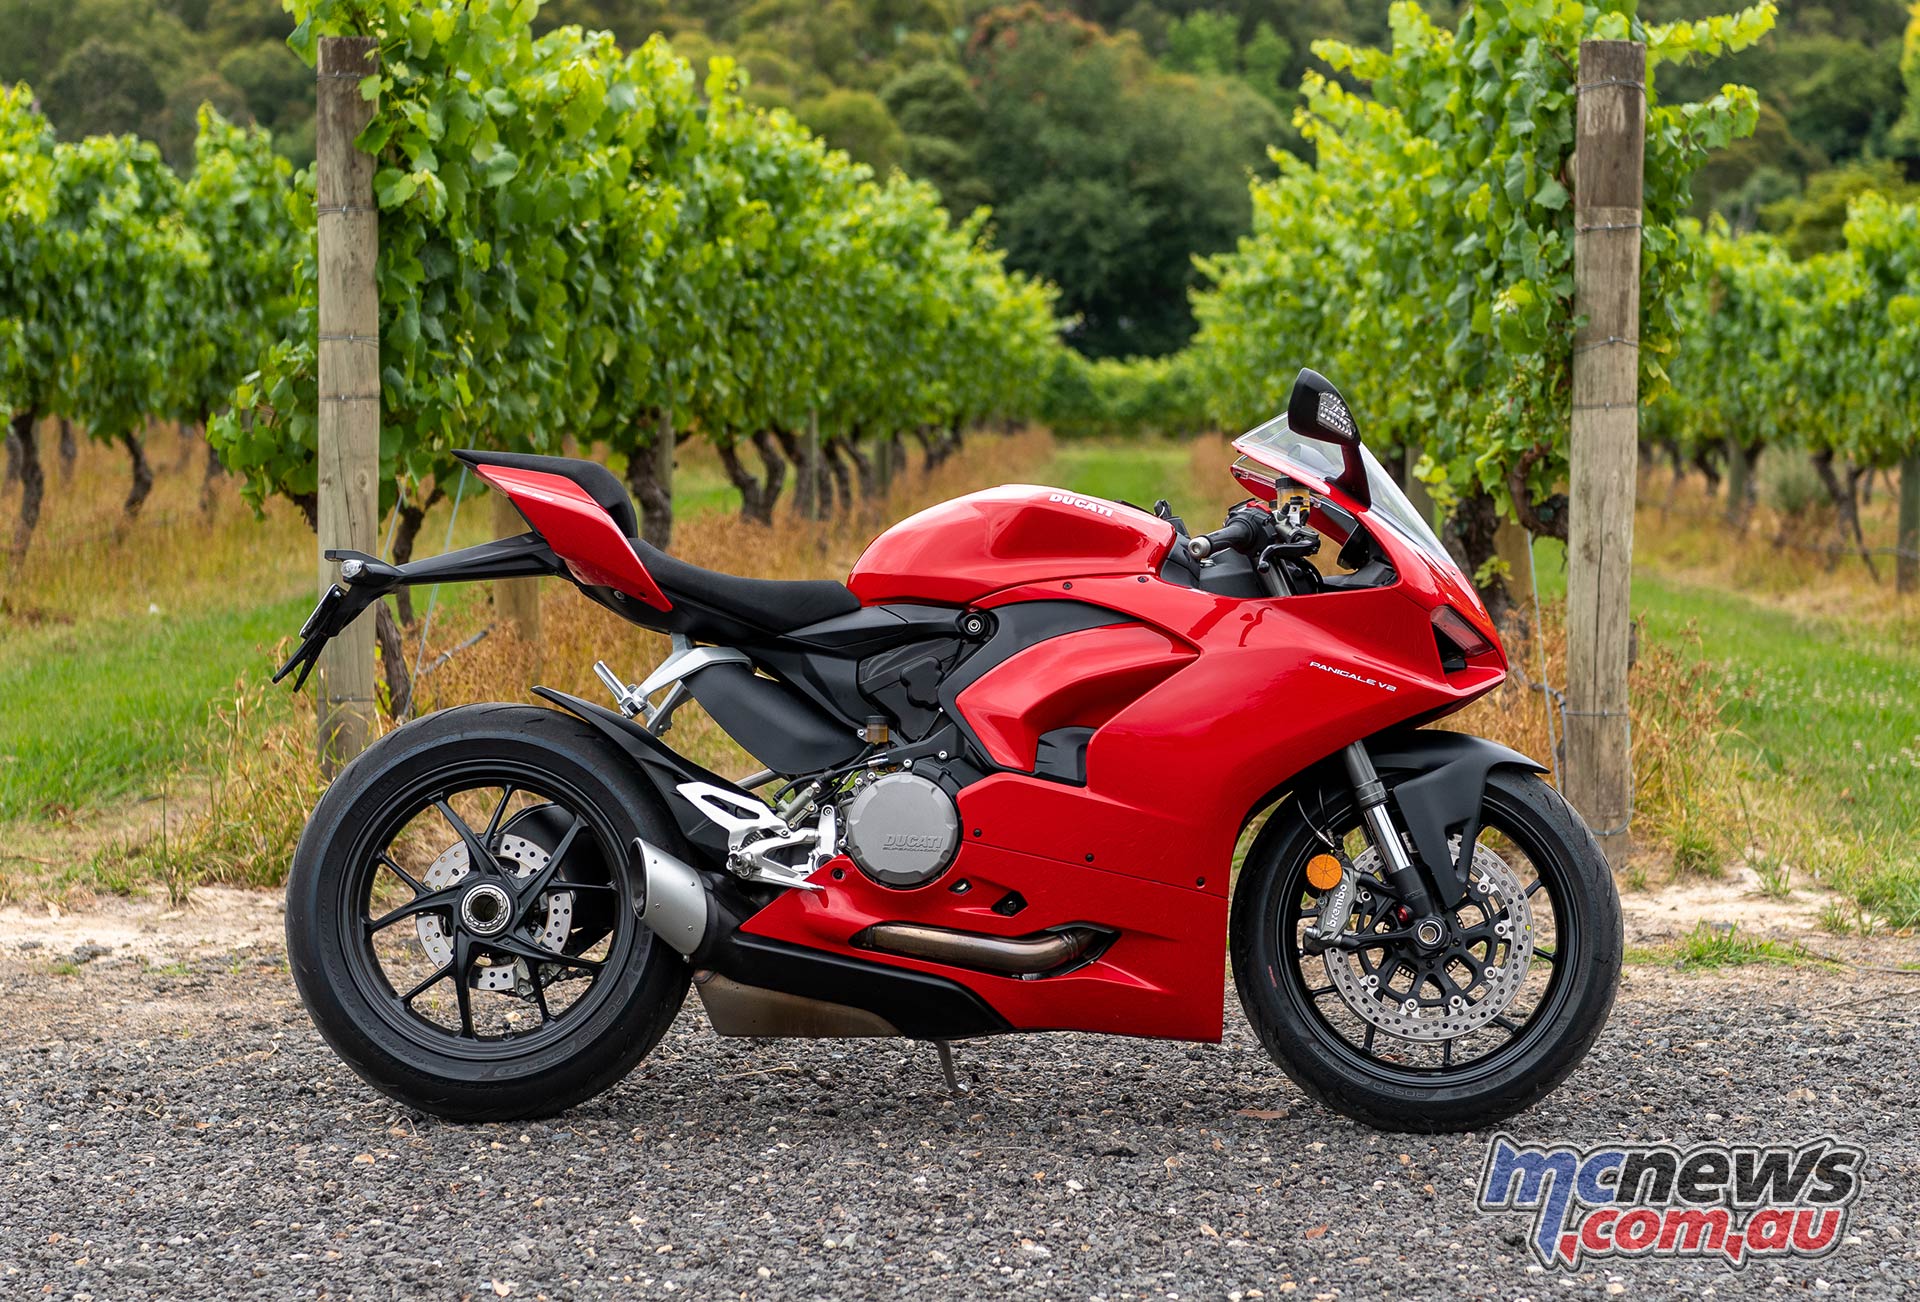 Ducati Panigale V2  Motorcross bike, Sports bikes motorcycles